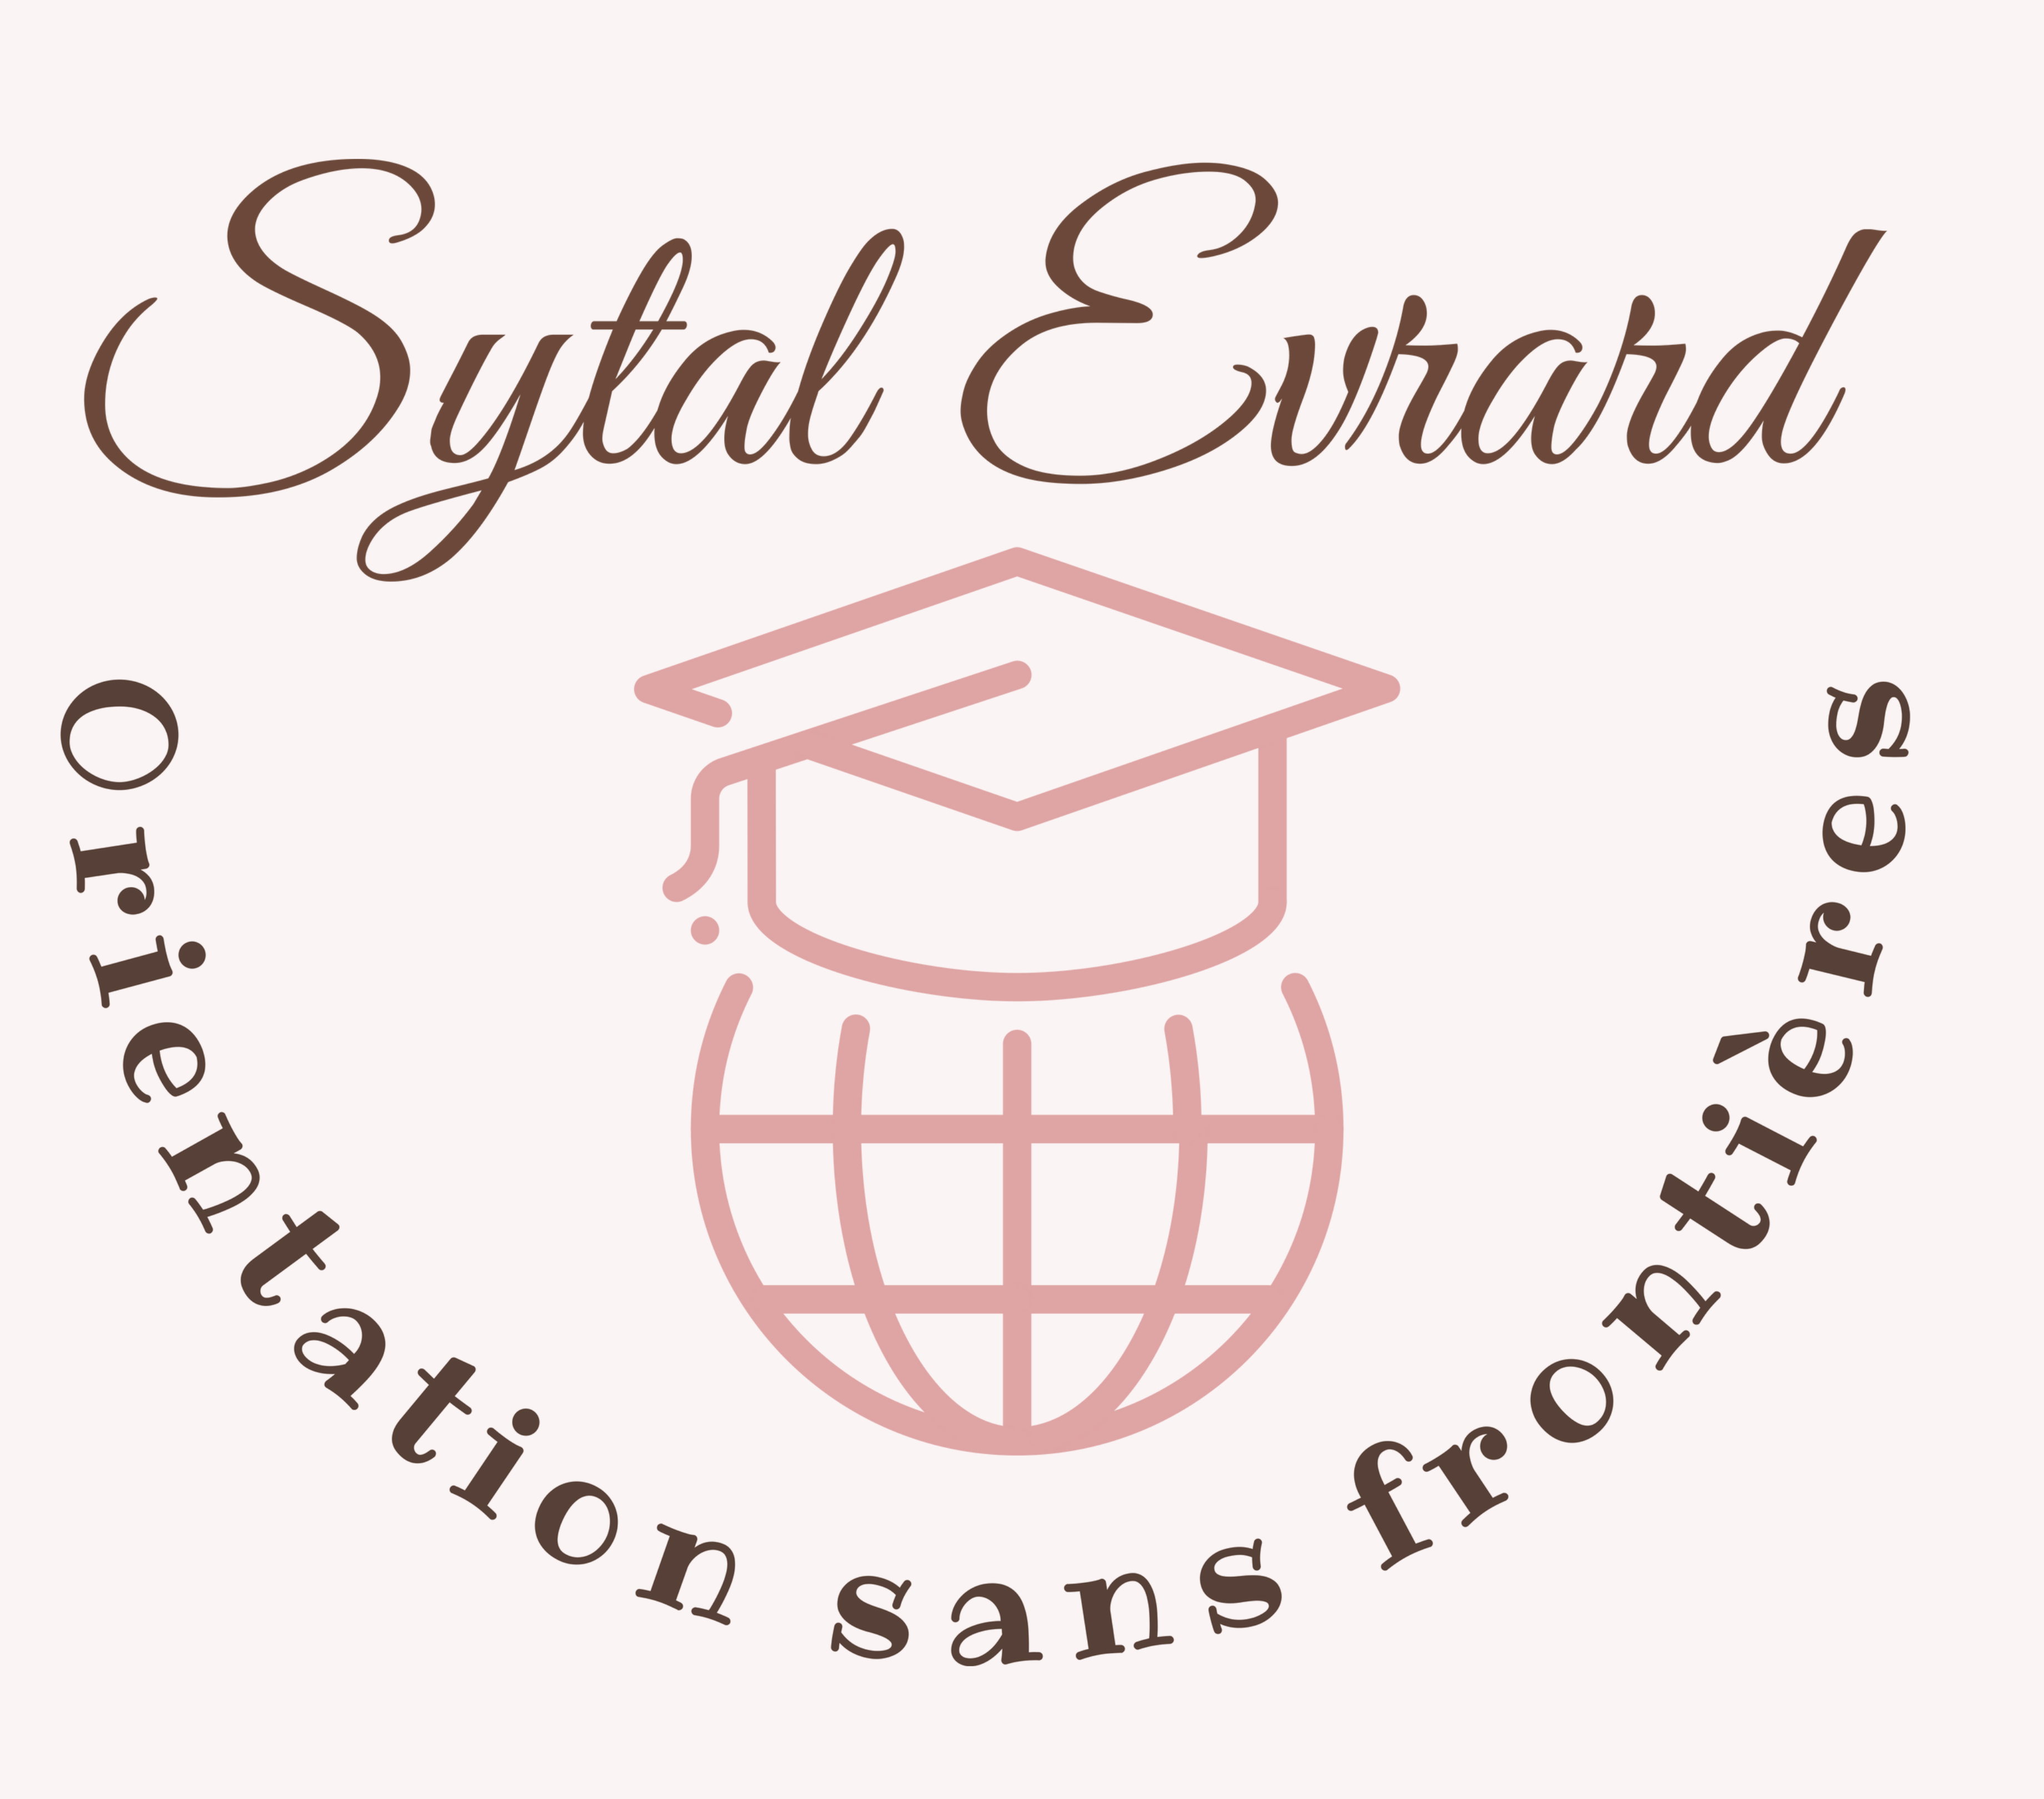 Sytal Evrad - Orientation sans frontières